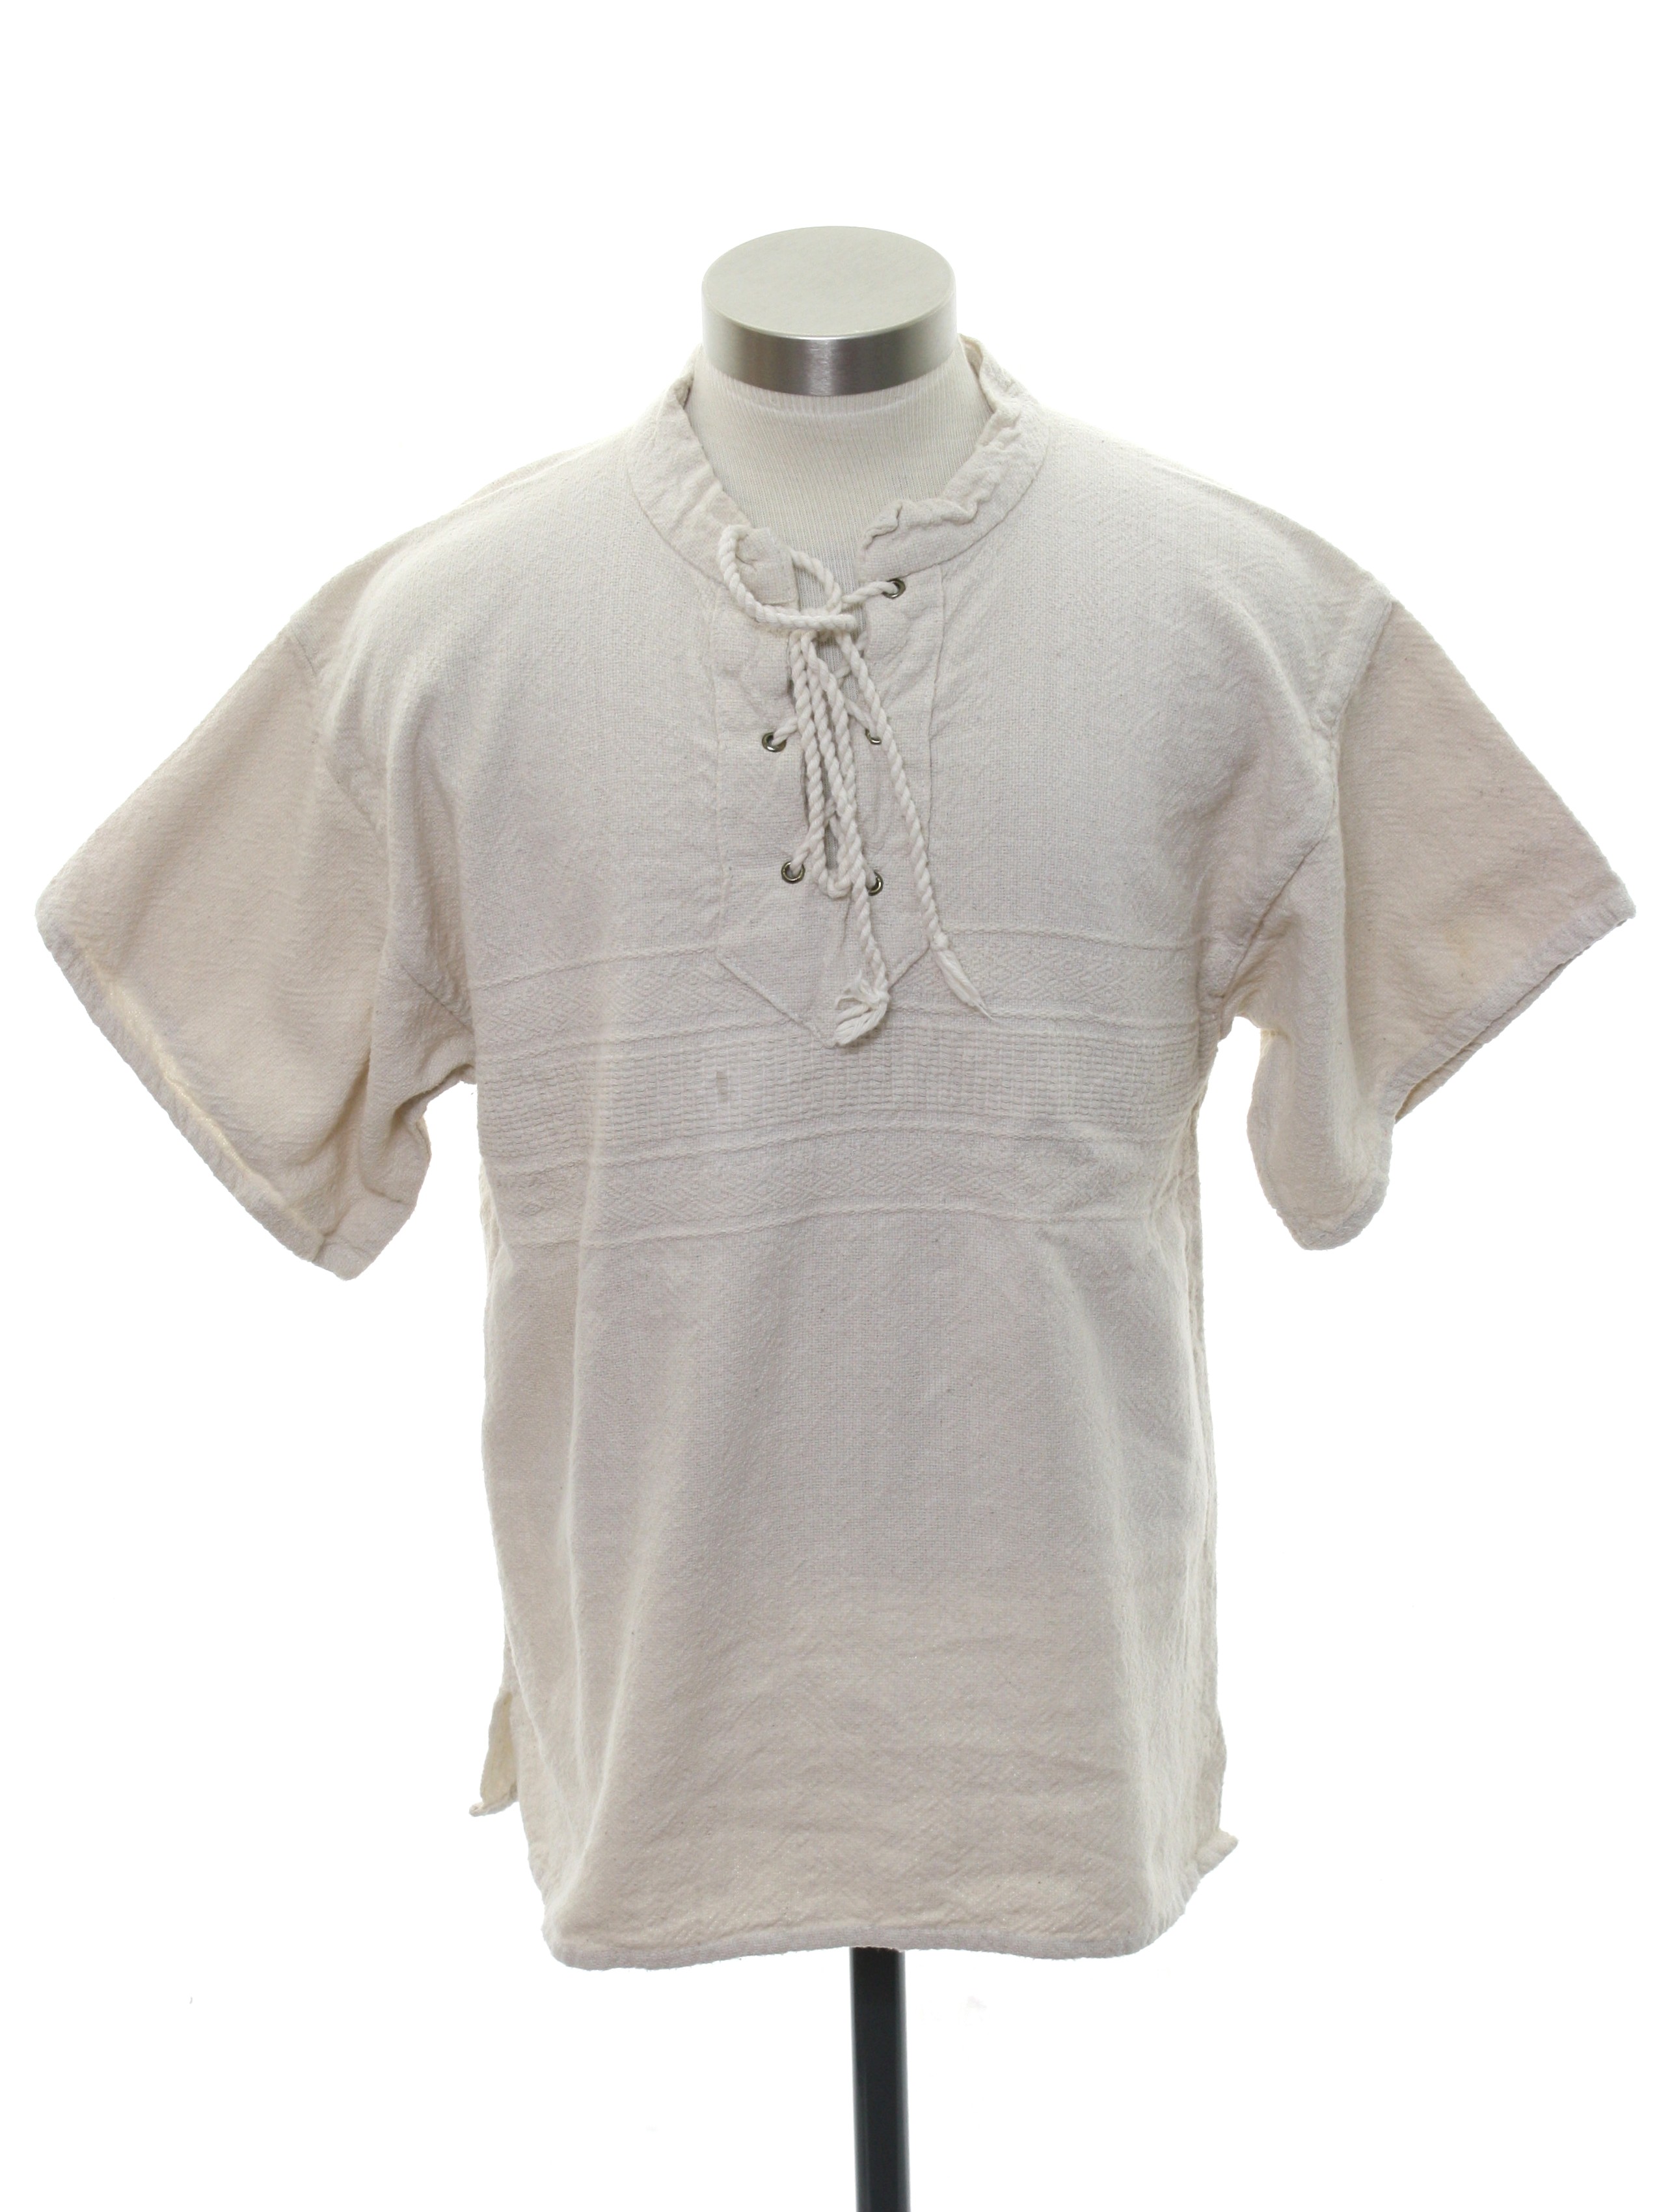 Retro 80s Hippie Shirt: 80s -No Label- Mens/Boys natural white cotton ...